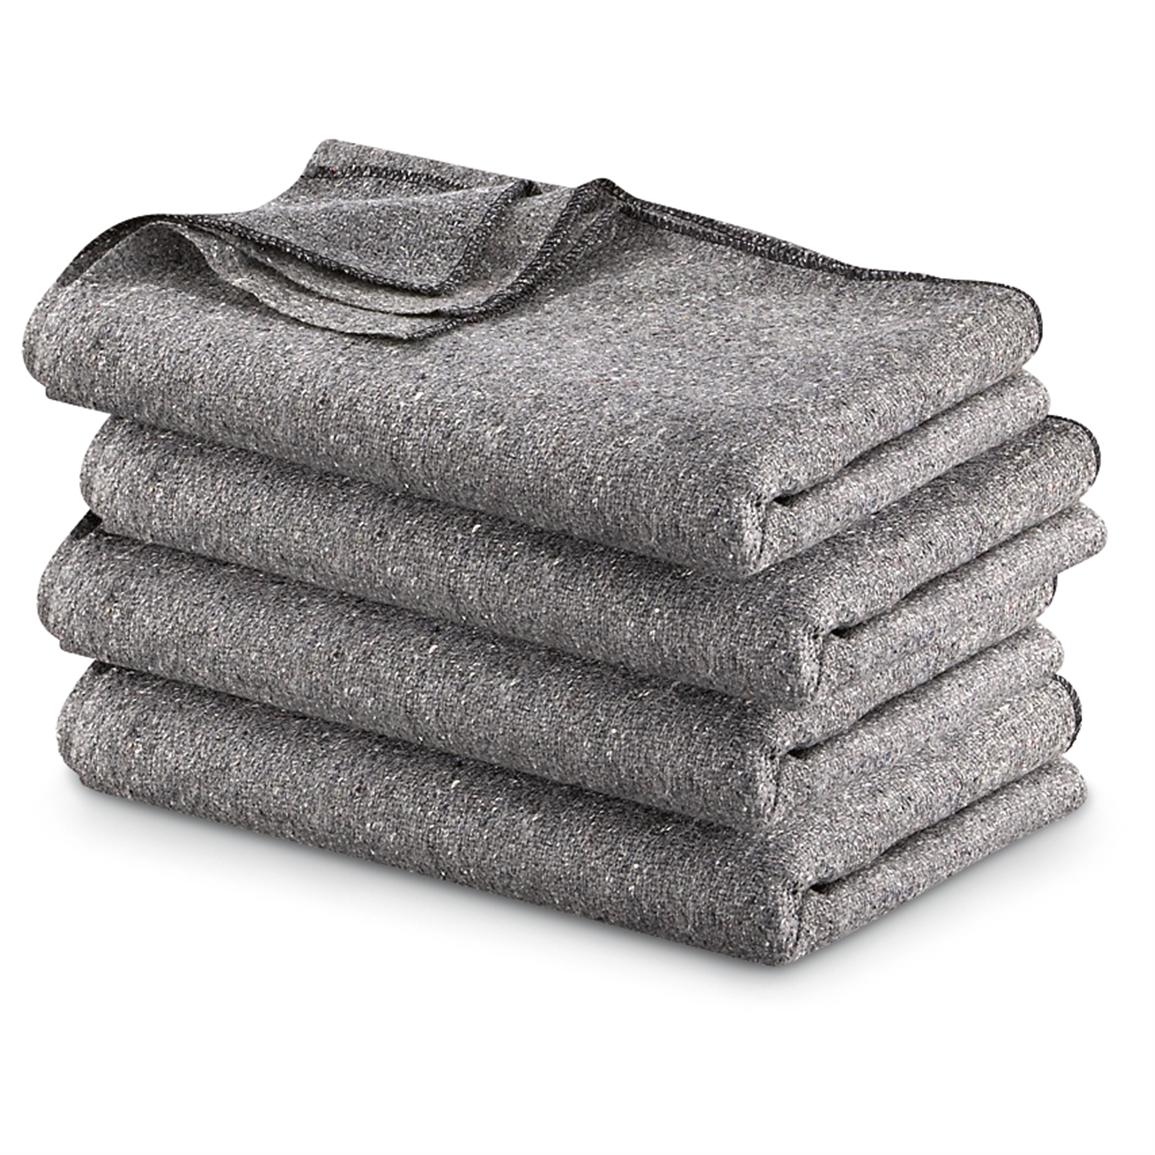 Military Surplus Wool Blankets, 4-Pk, 60" x 80" Size - 186794, Blankets